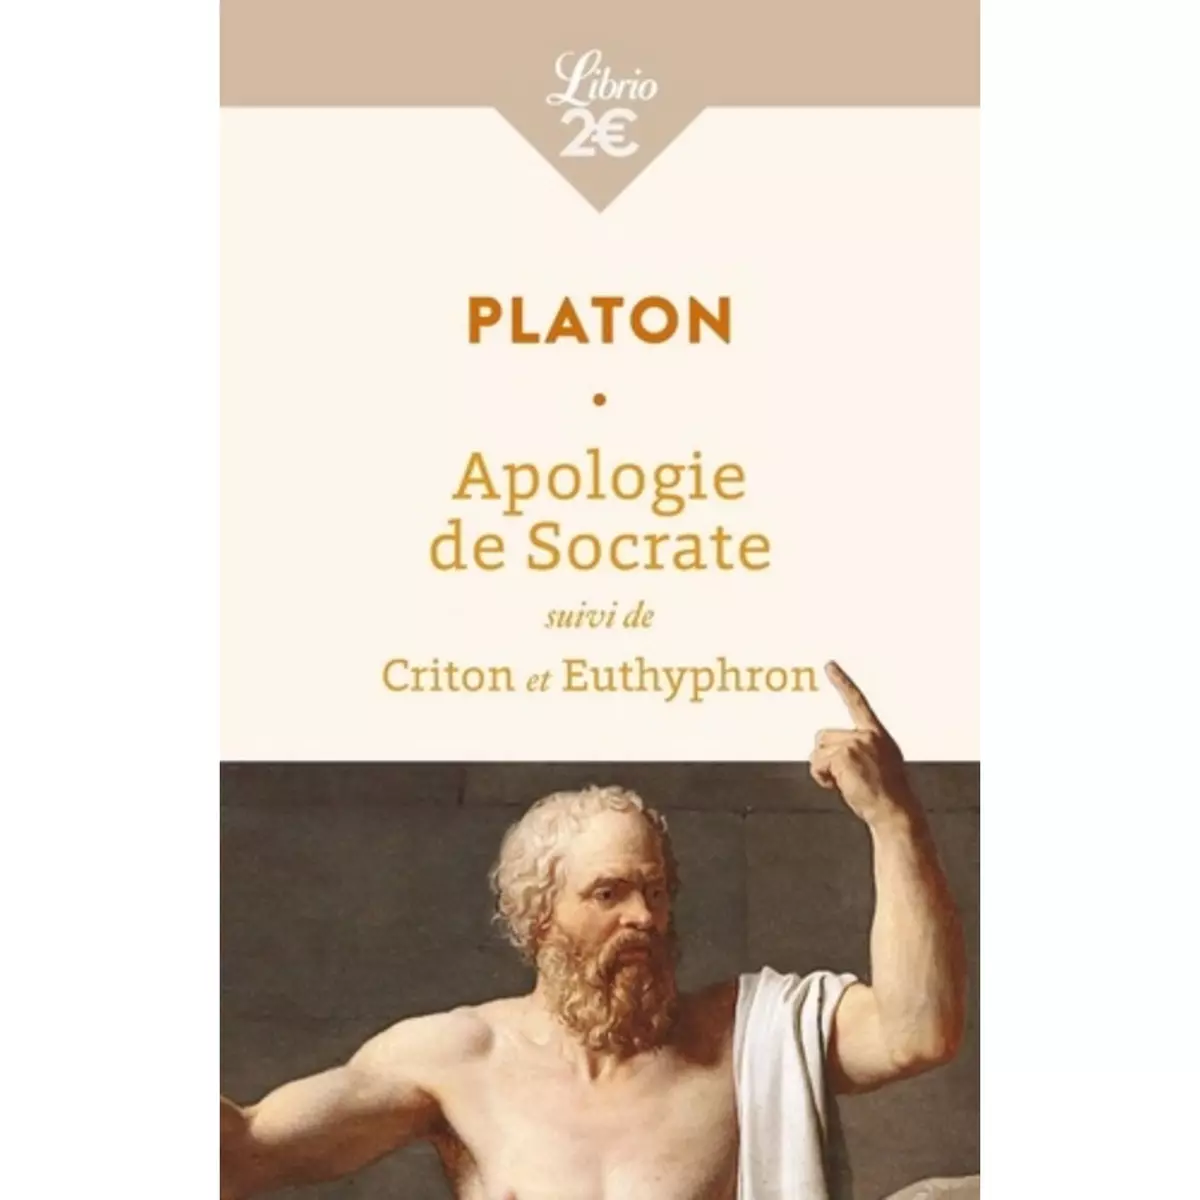  APOLOGIE DE SOCRATE. SUIVI DE CRITON ET EUTHYPHRON, Platon